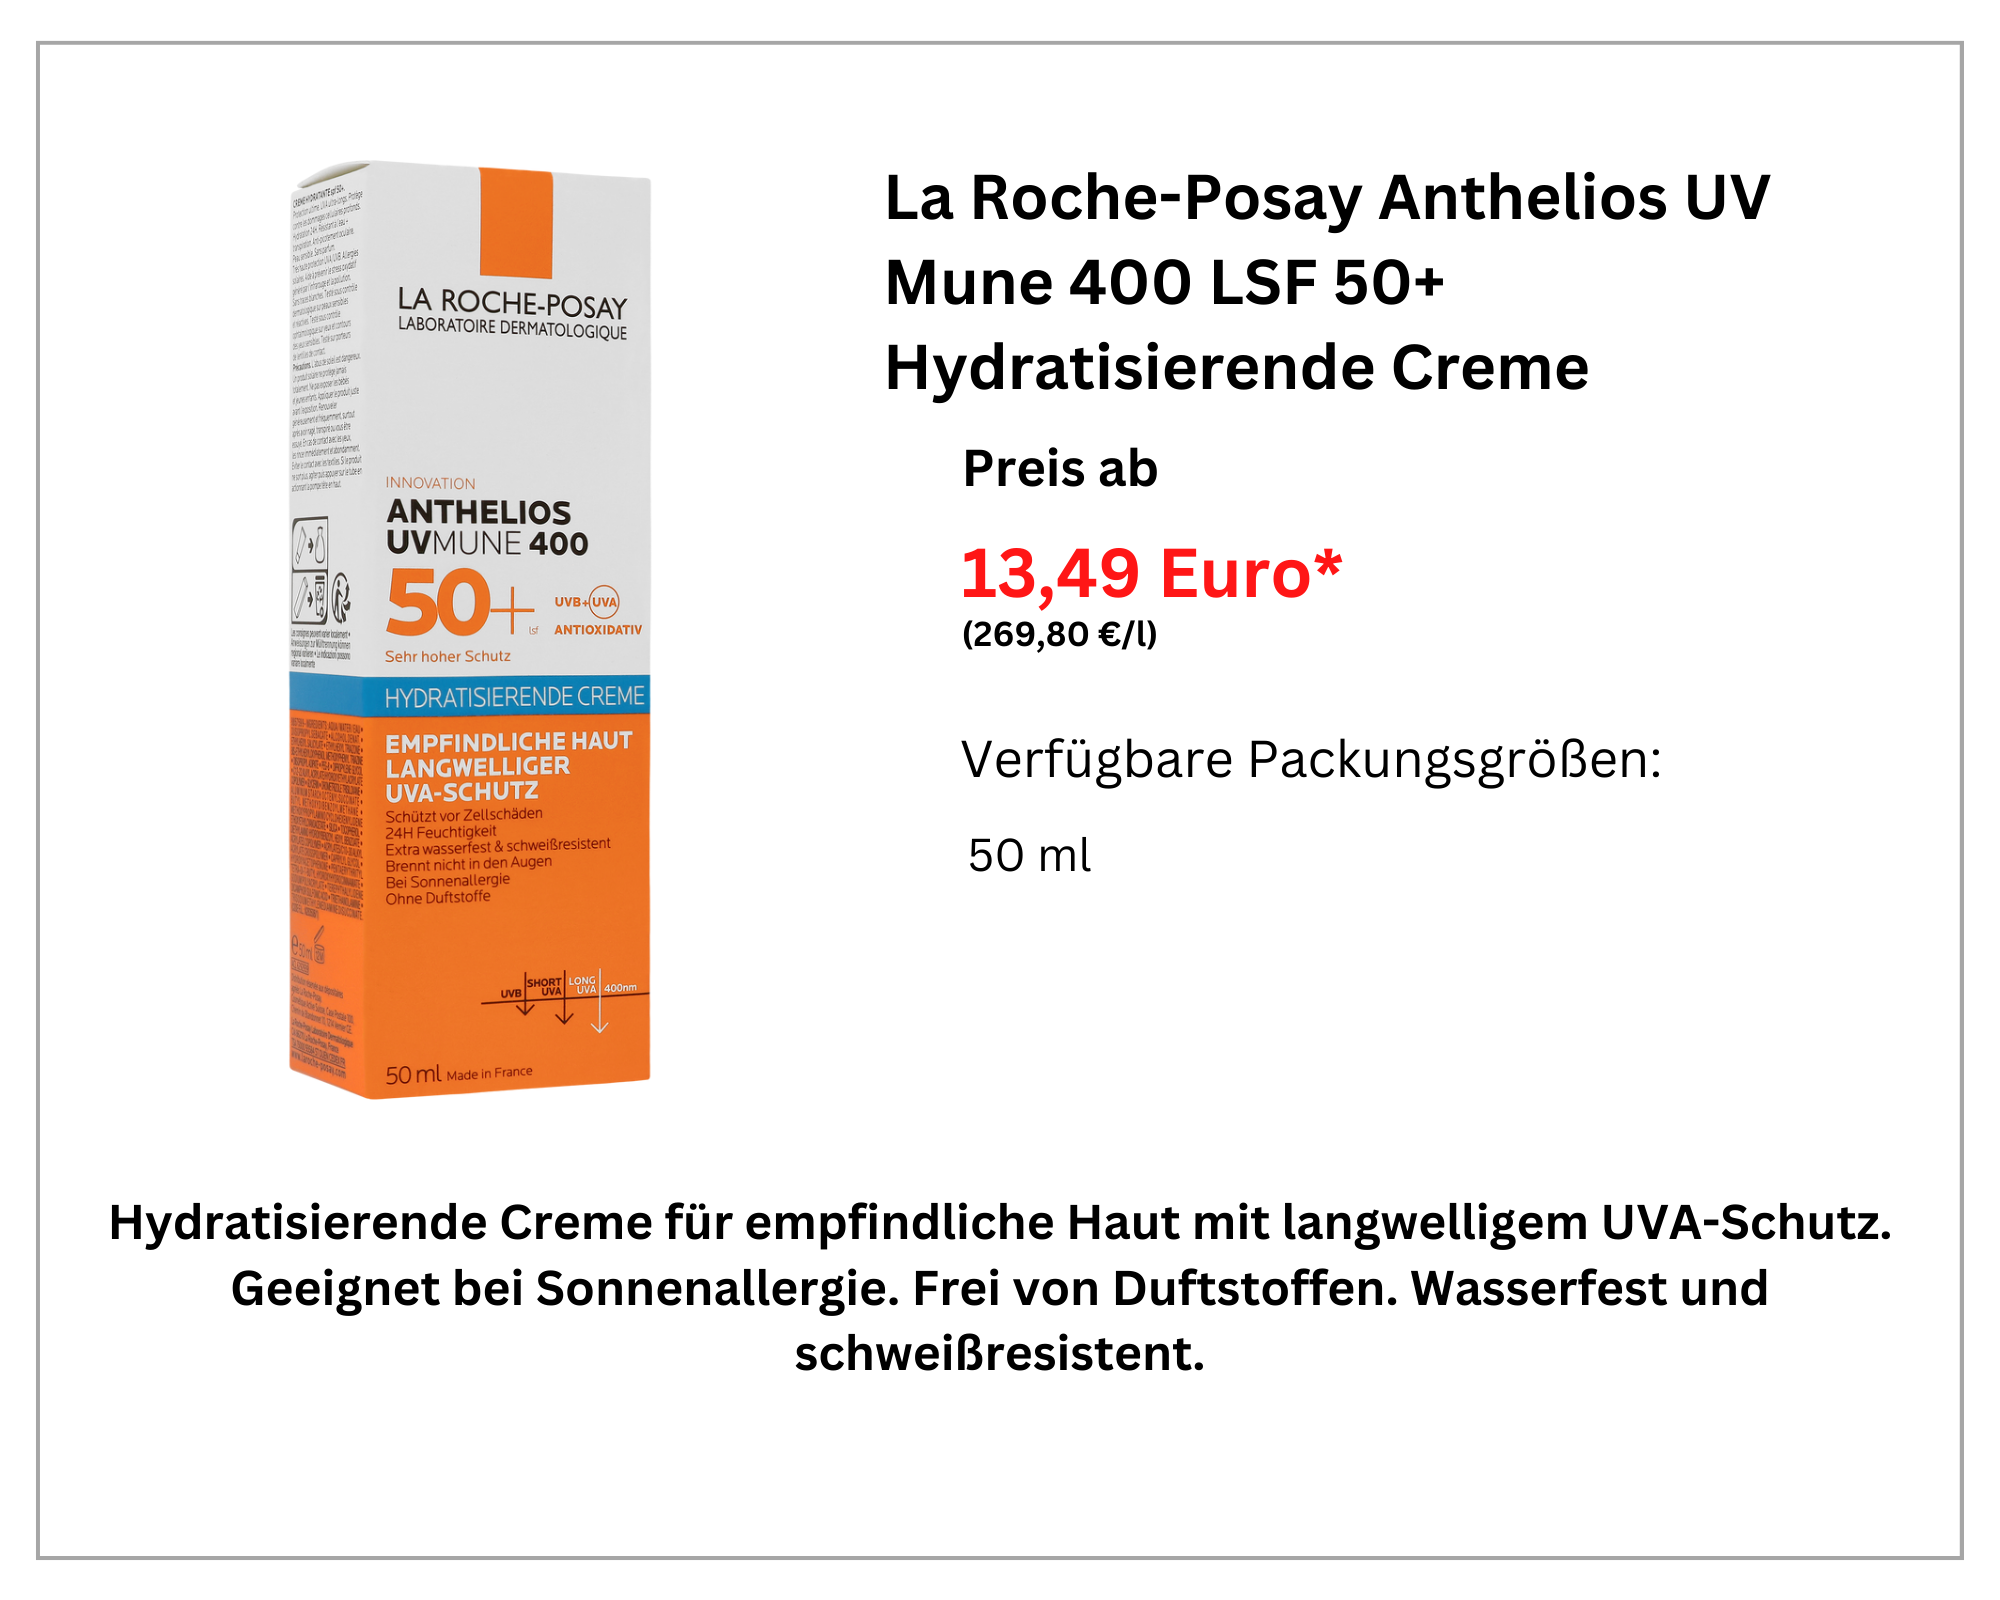  La Roche-Posay Anthelios Hydratisierende Creme UVMune 400 width=